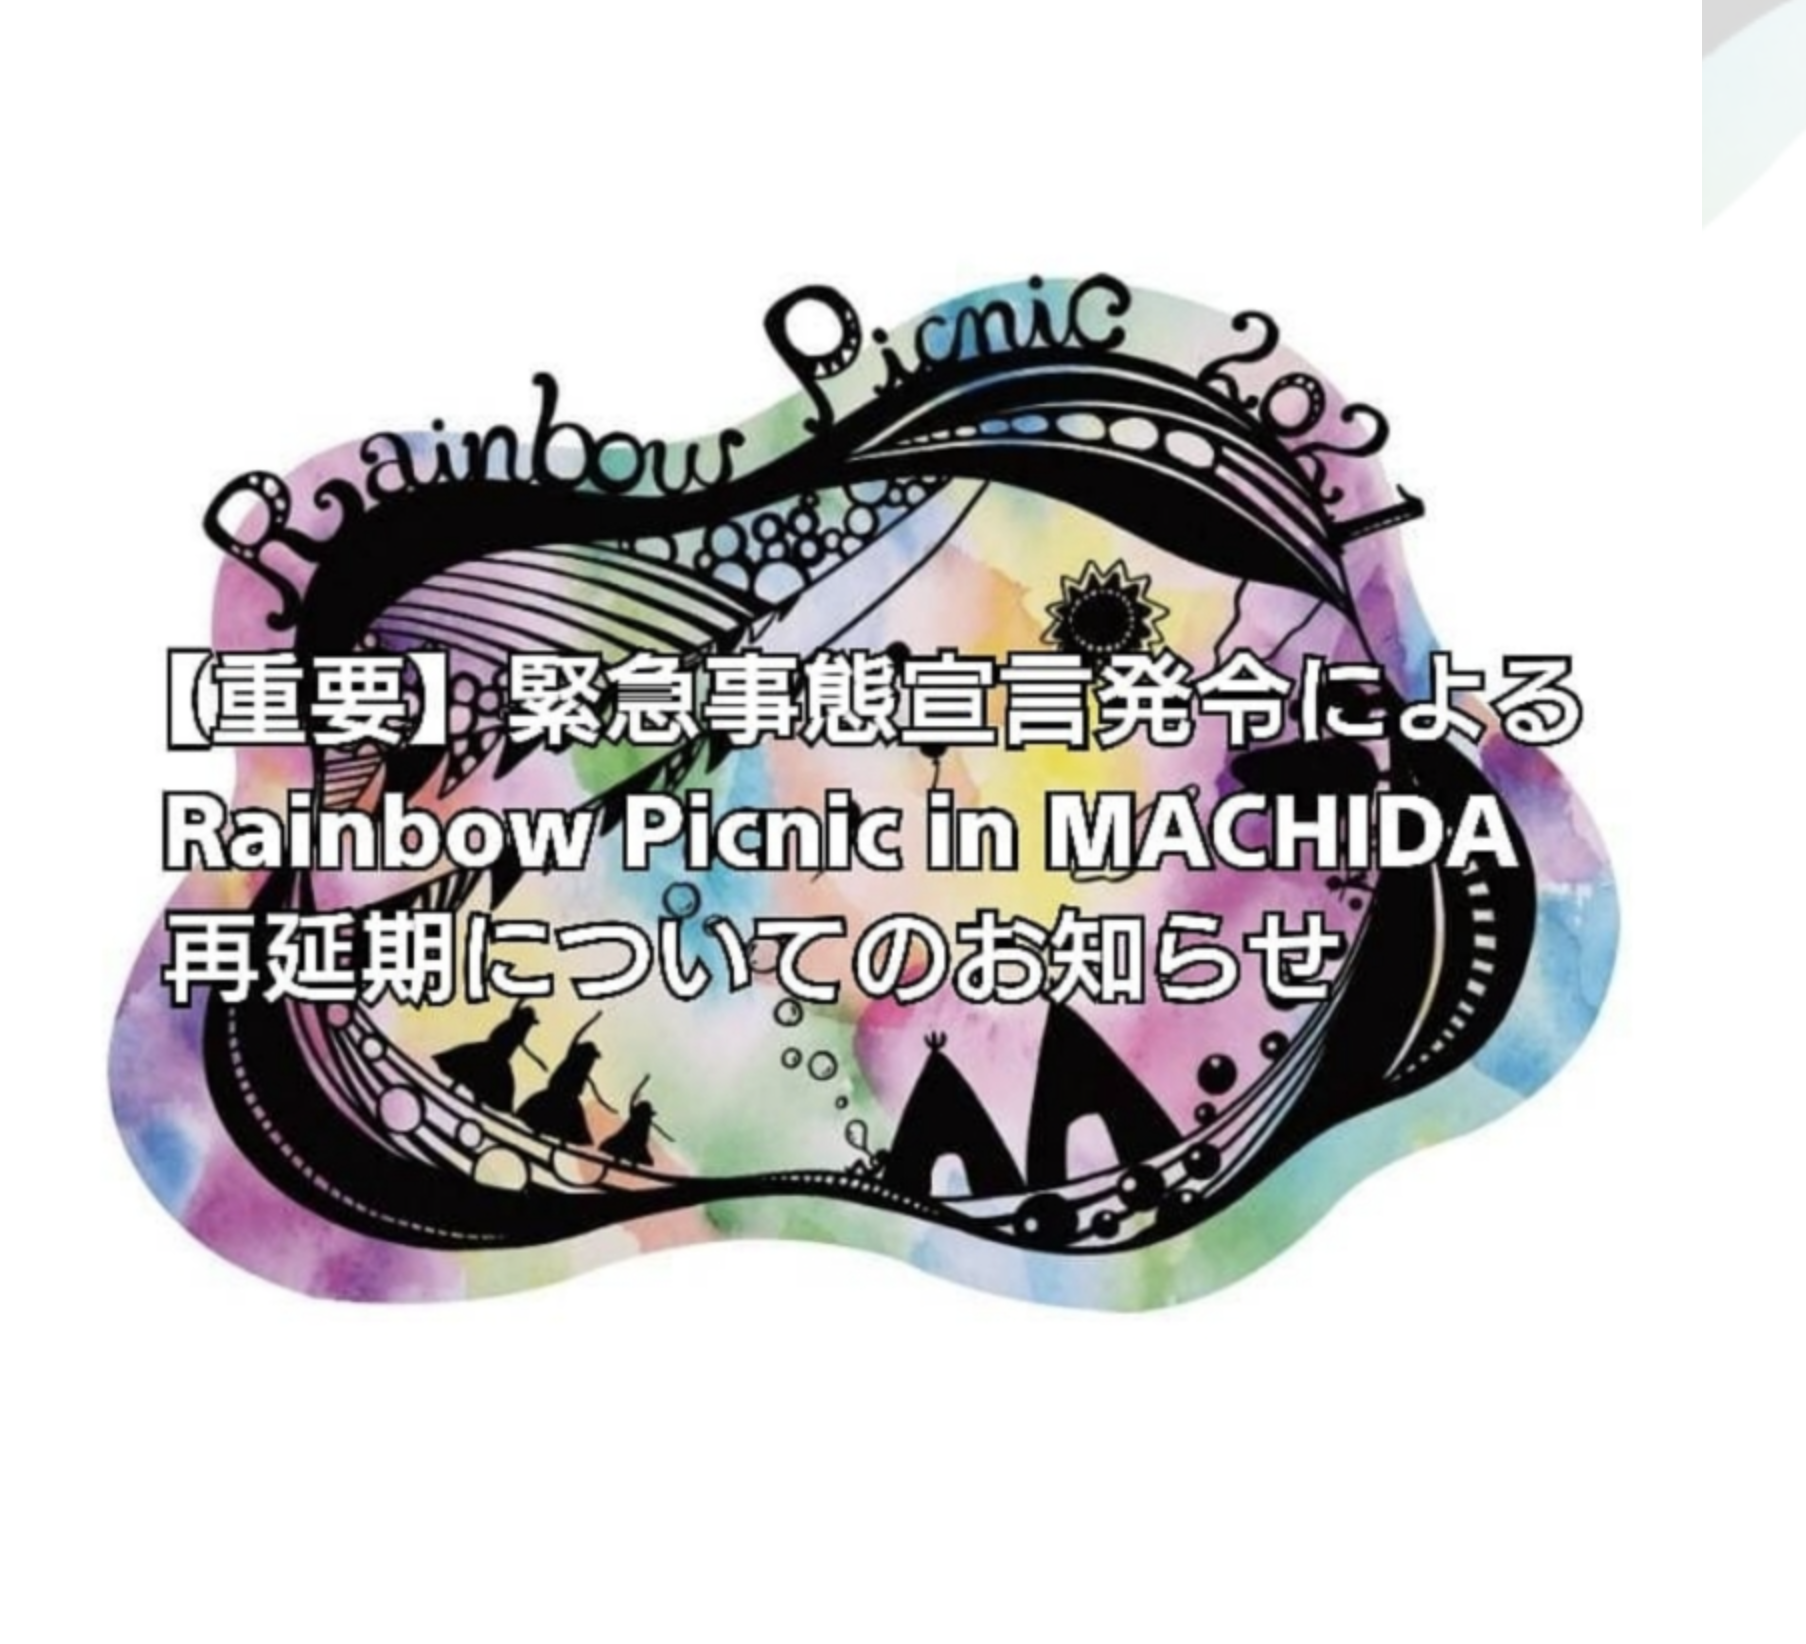 Rainbow Picnic in MACHIDA ハギレ販売イベント延期のお知らせ